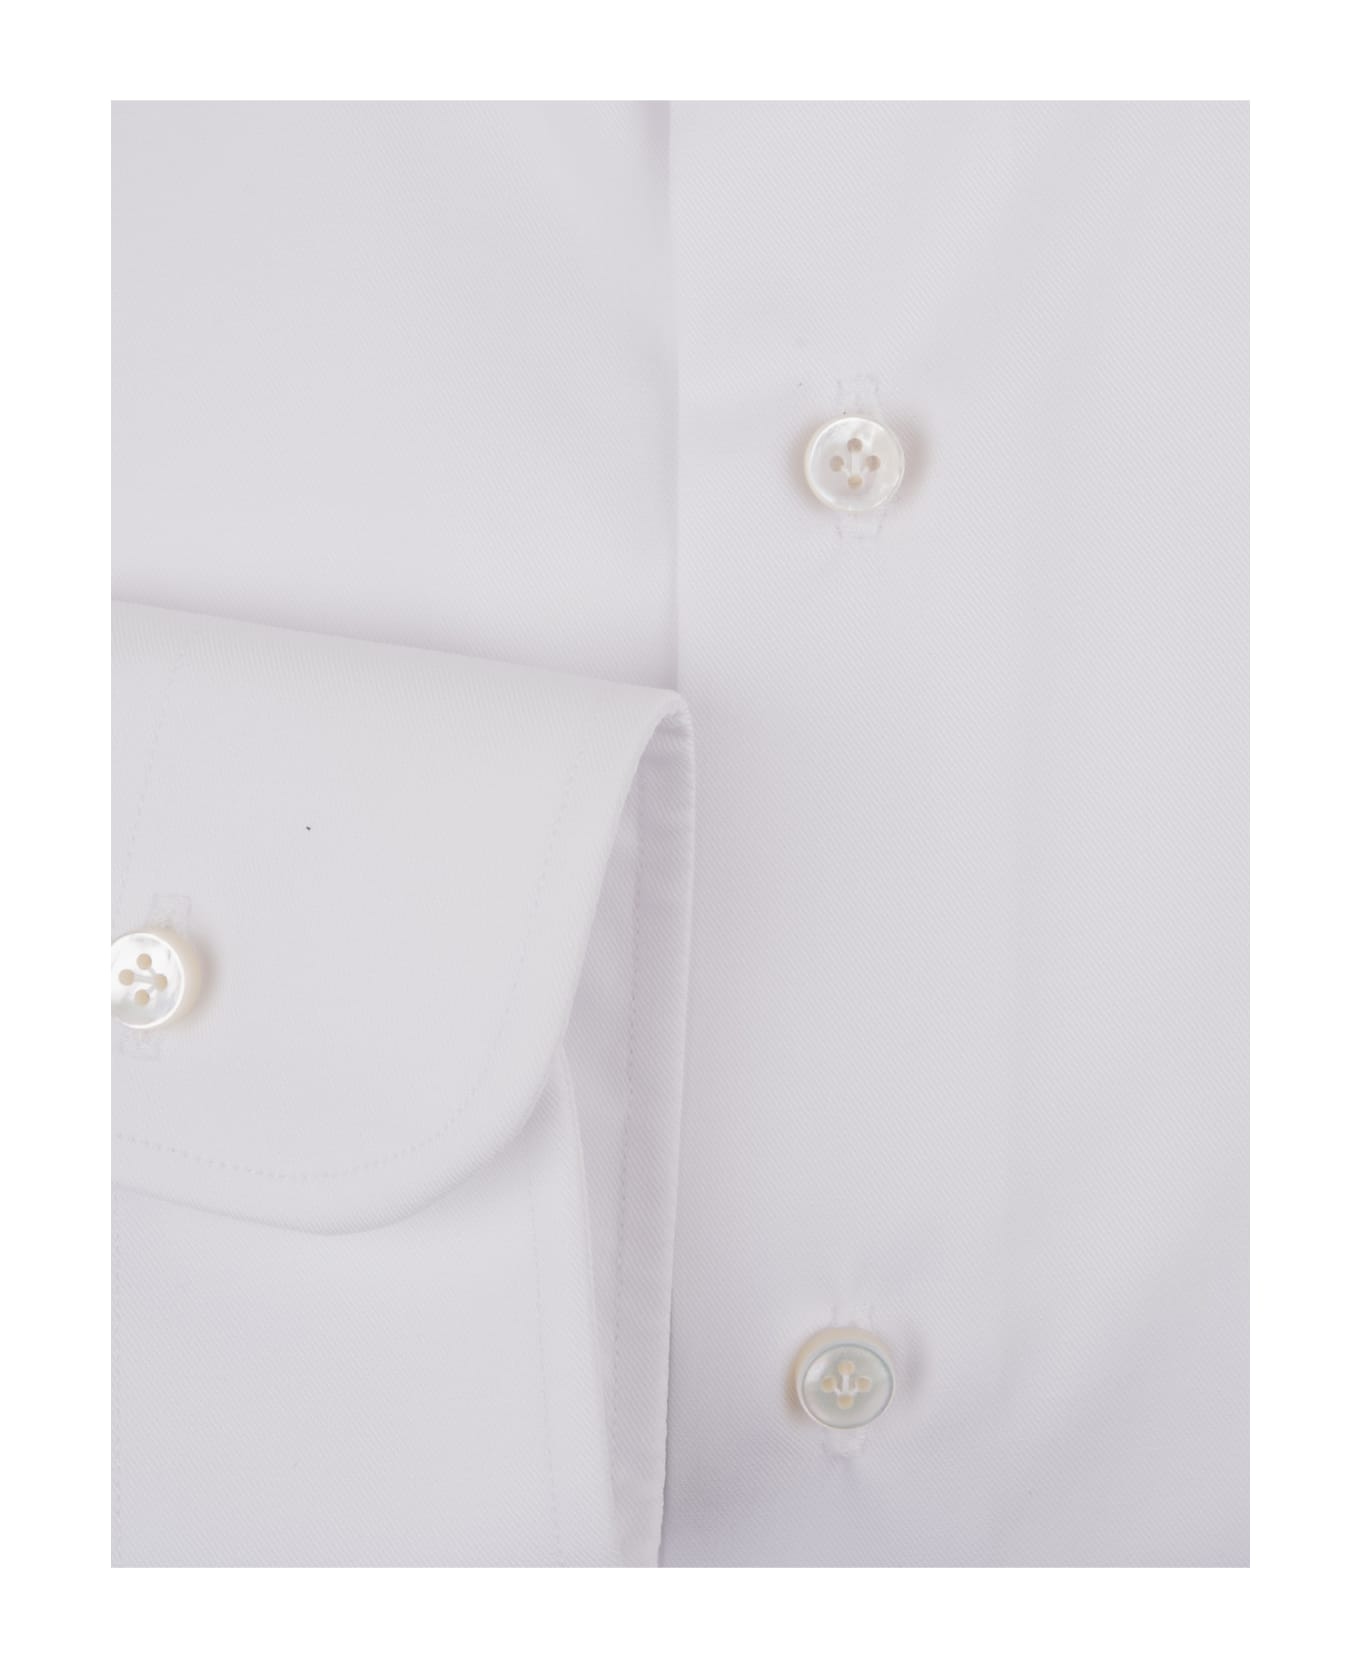 Barba Napoli Slim Fit Shirt In White Cotton - White シャツ